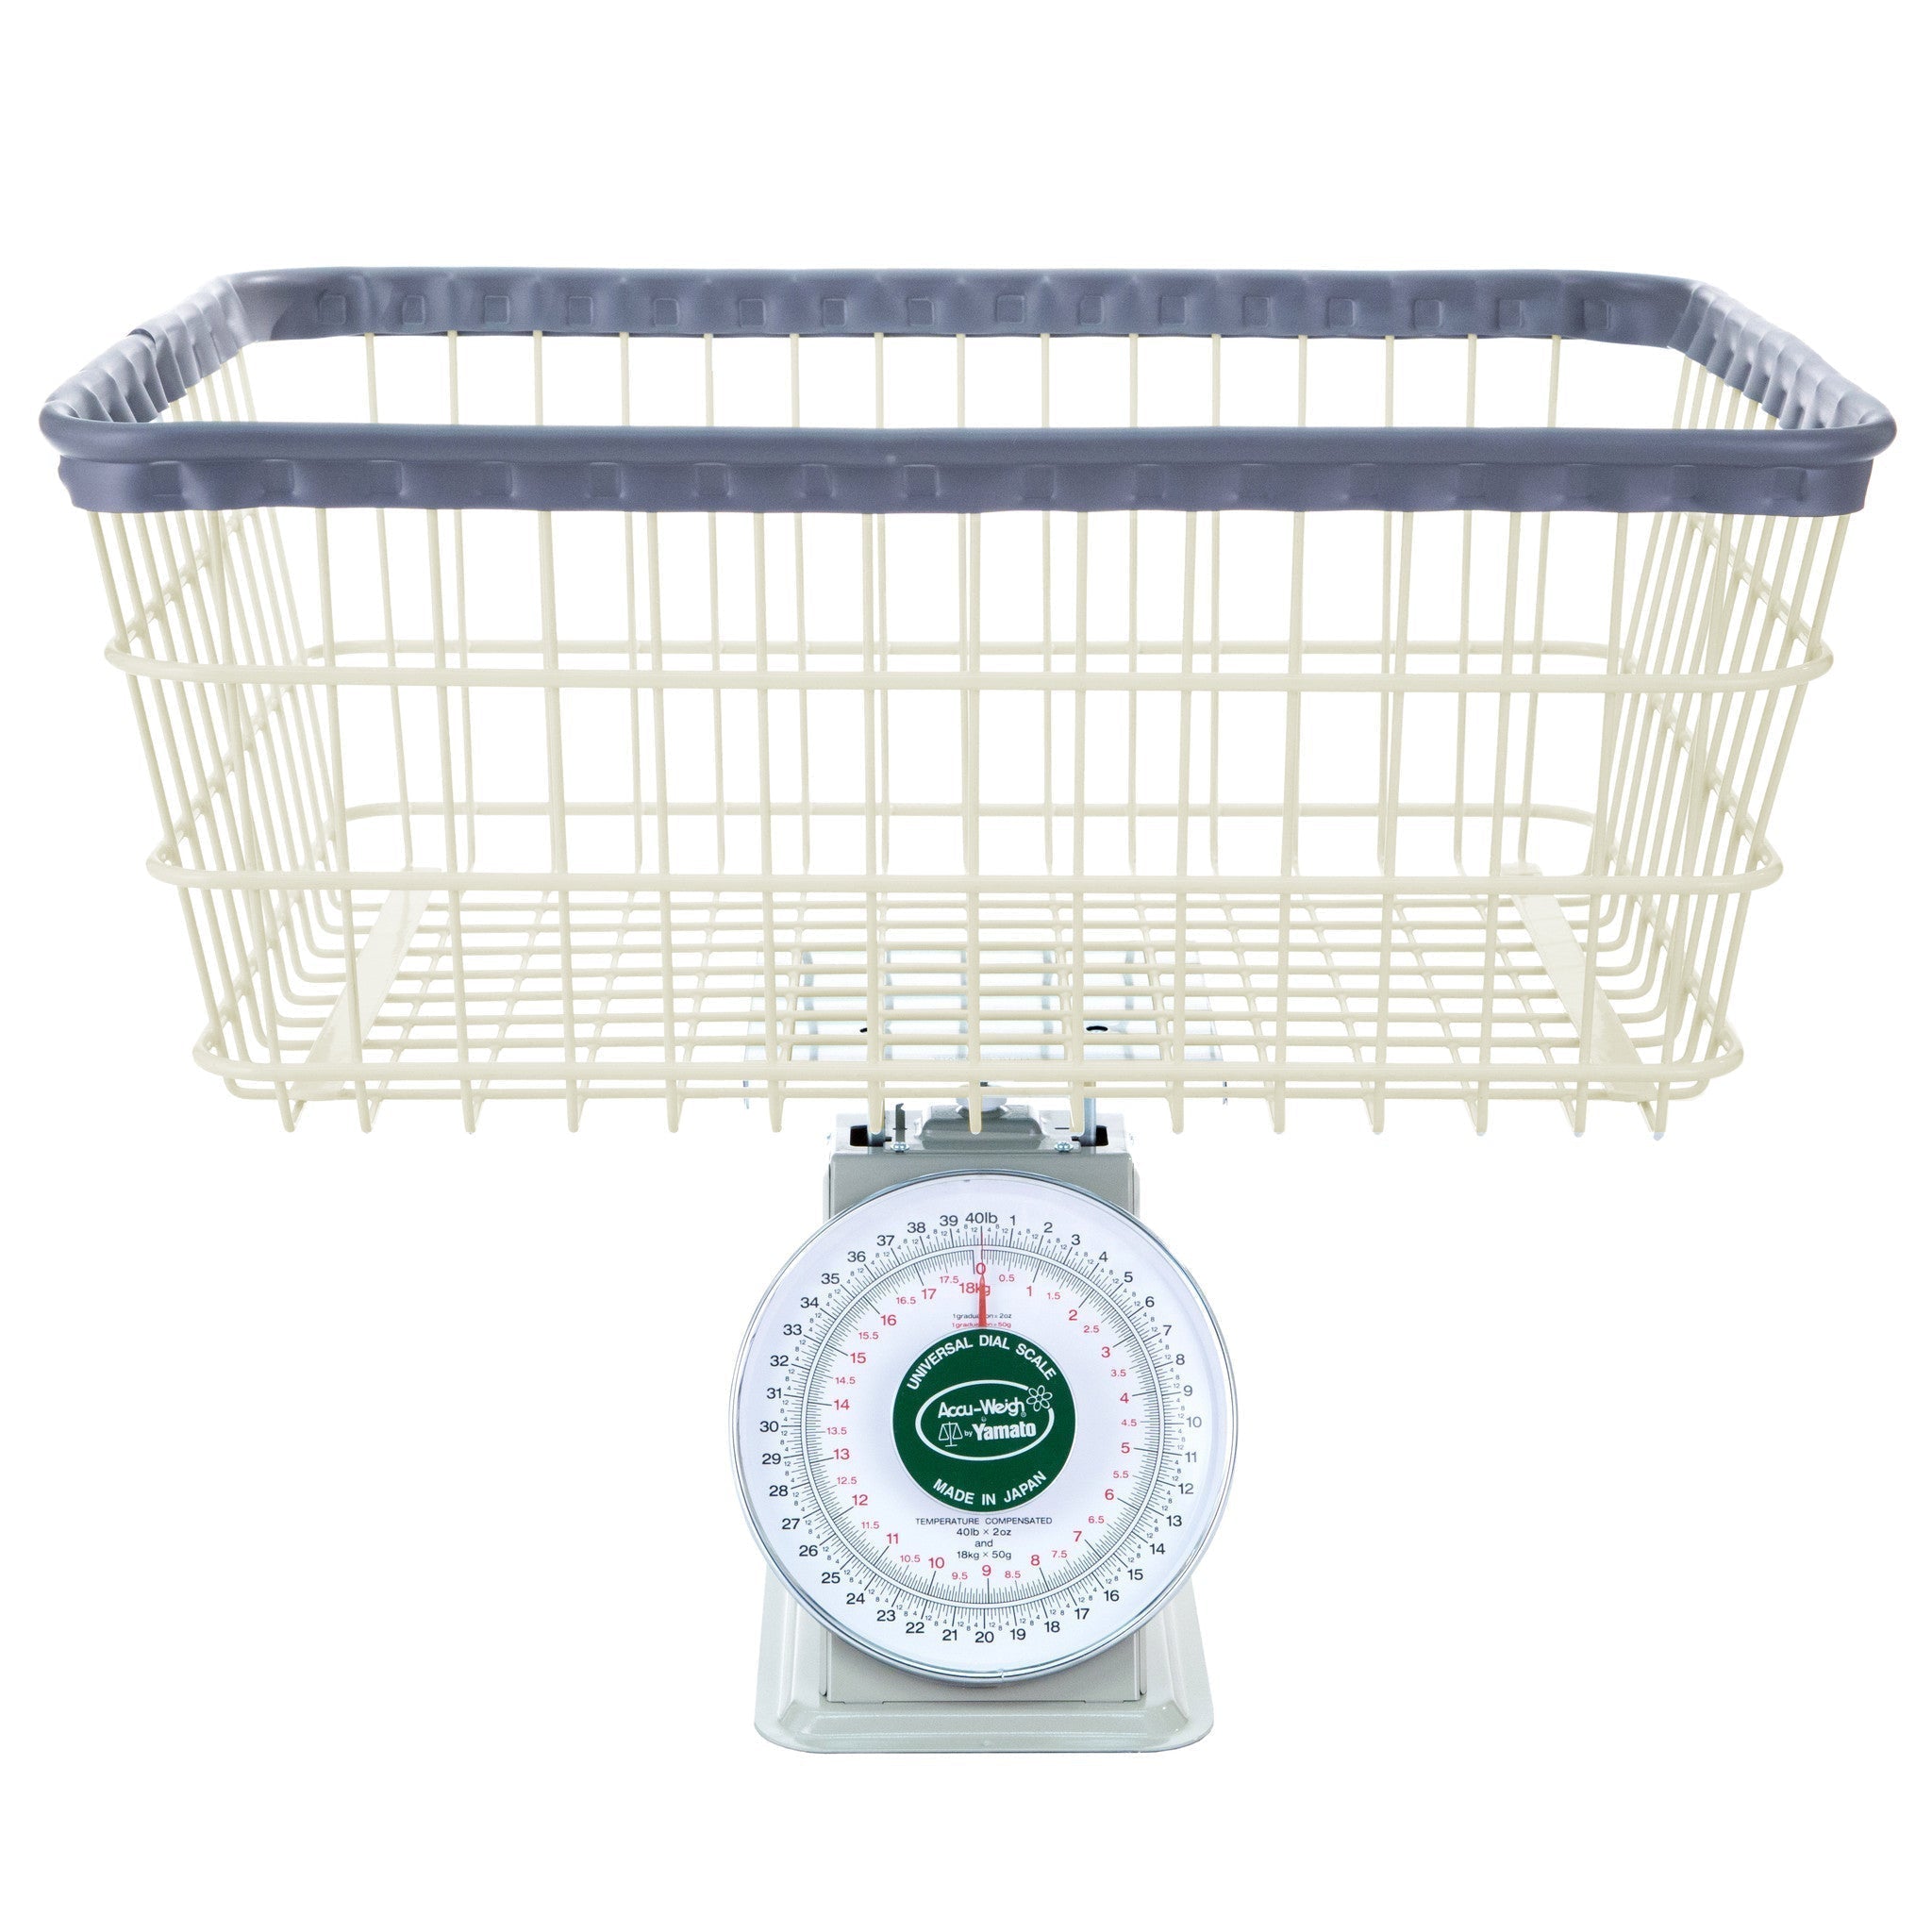 Laundry Scales - Norton Supply